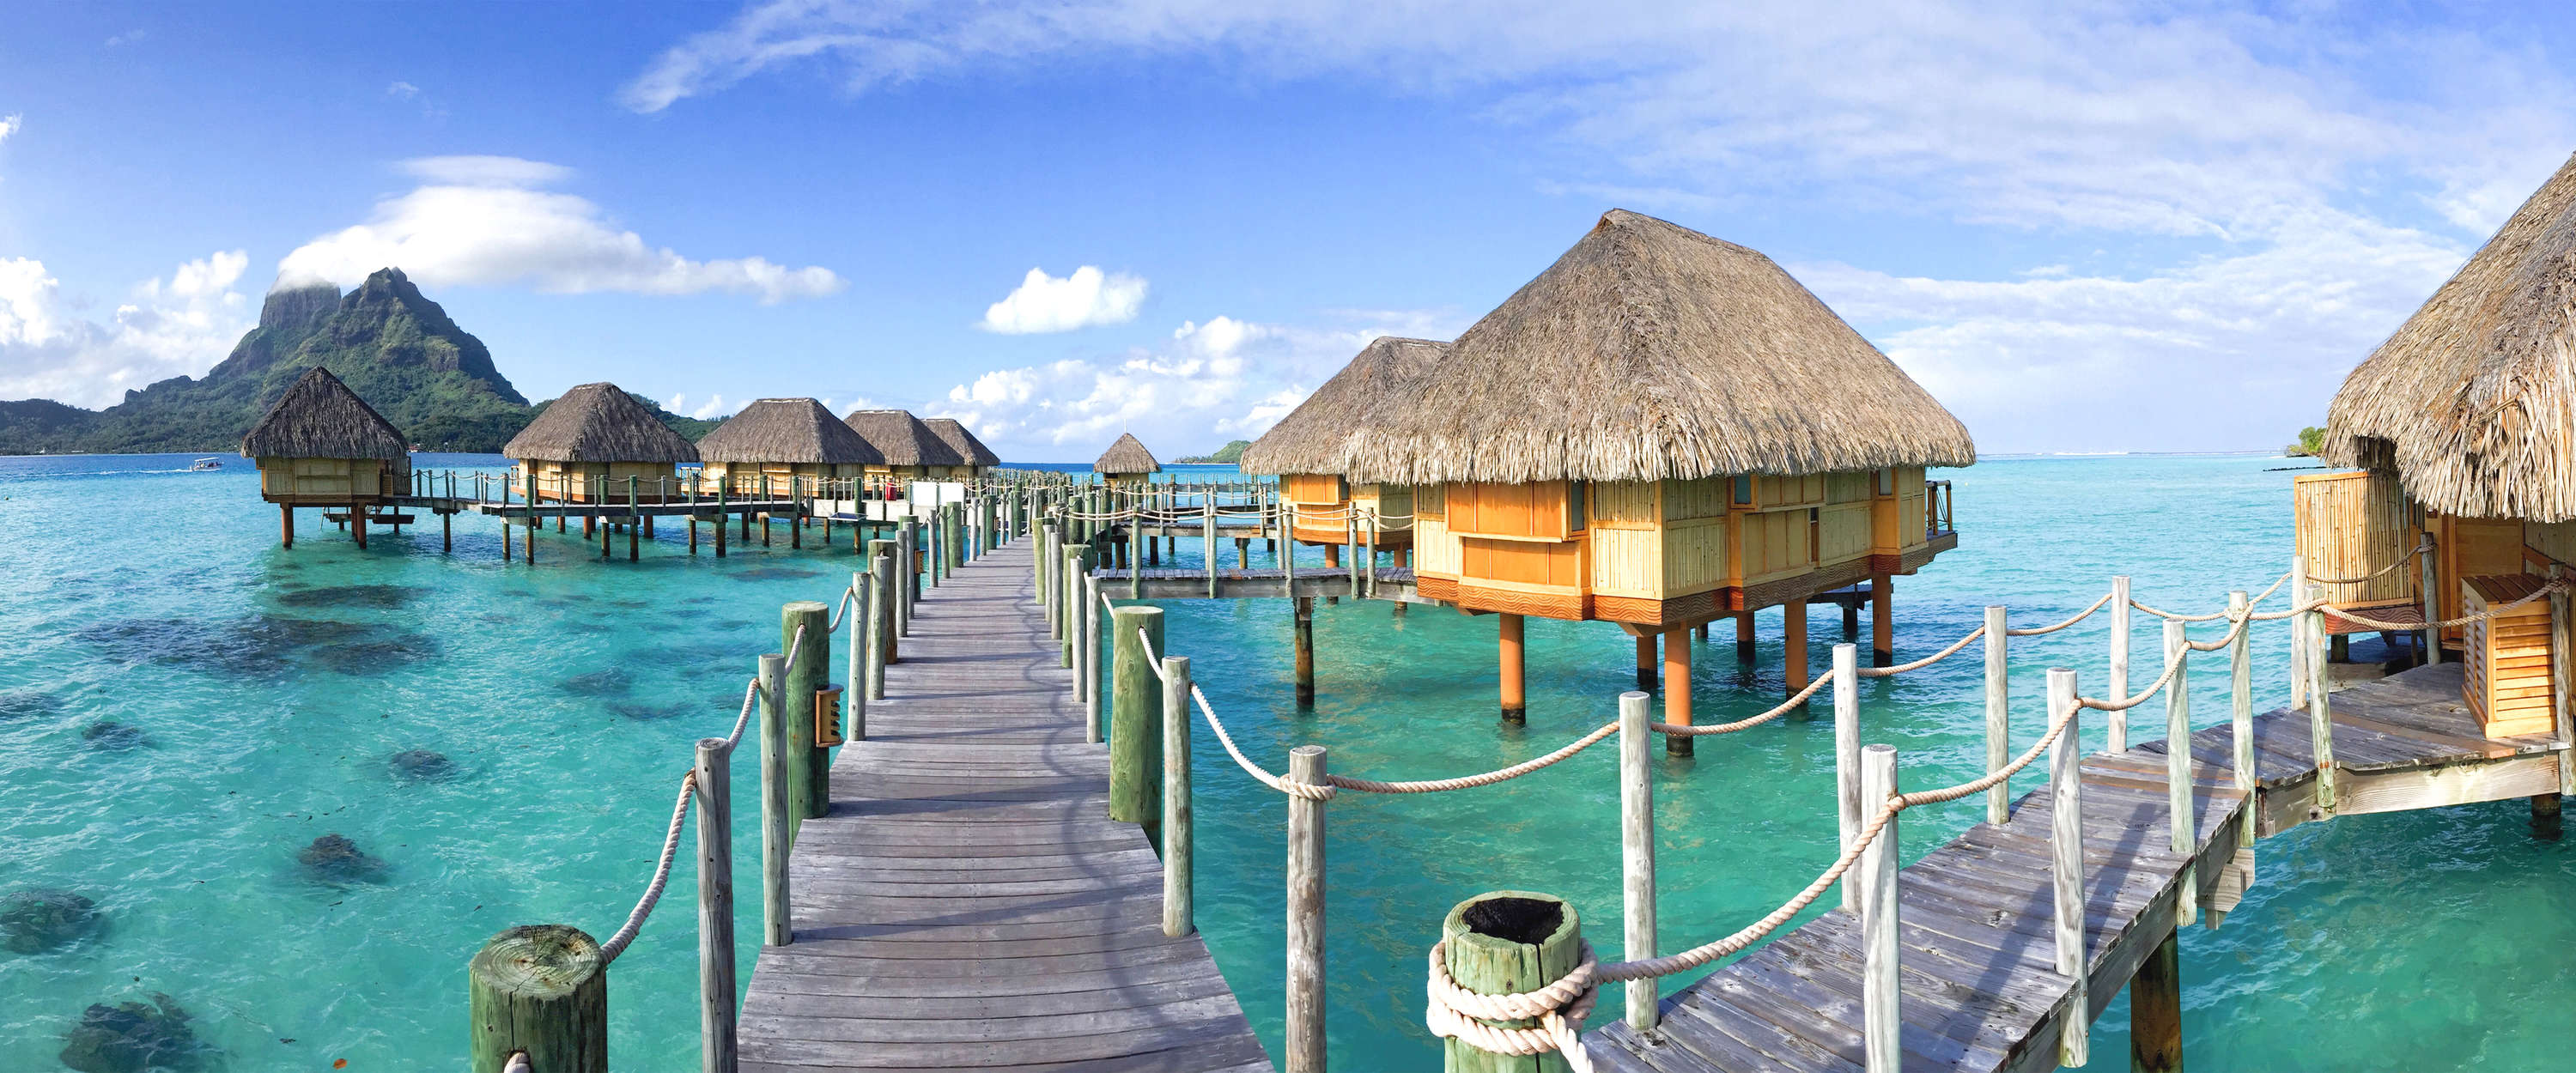             Exotische Fototapete Tahiti Bungalows im Wasser
        